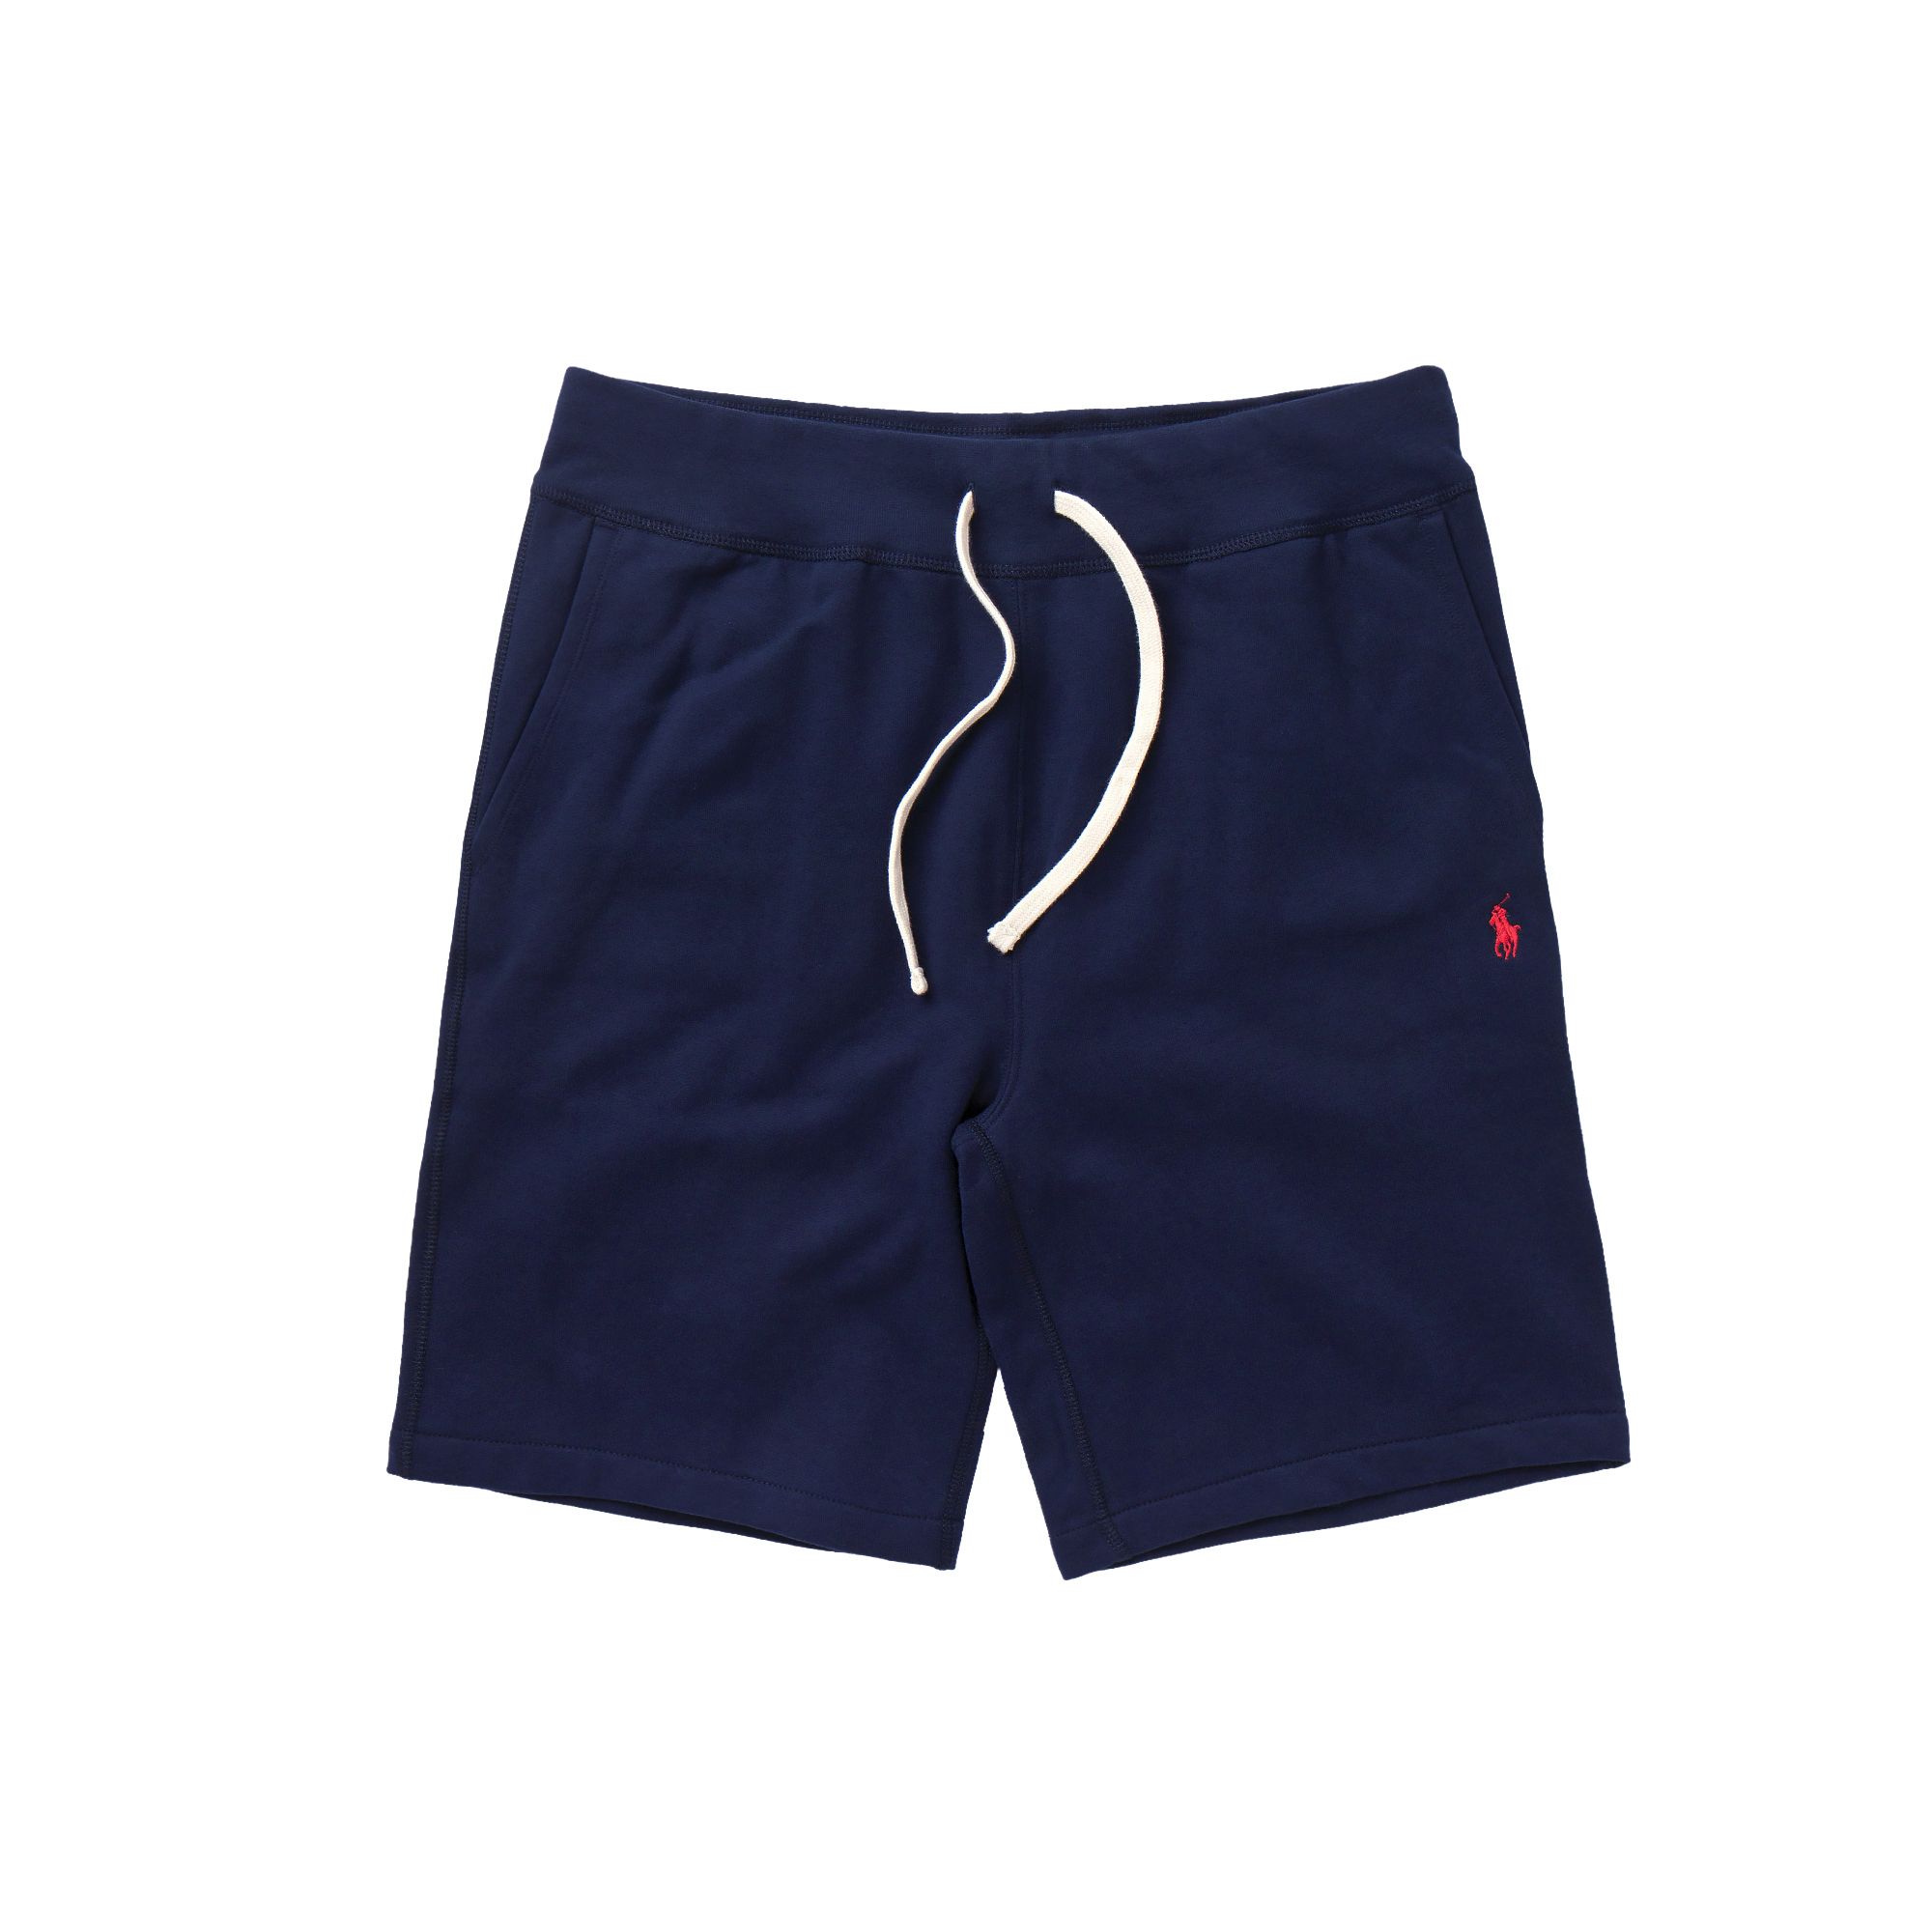 Polo Ralph Lauren - classic athletic short men sport & team shorts blue in größe:l